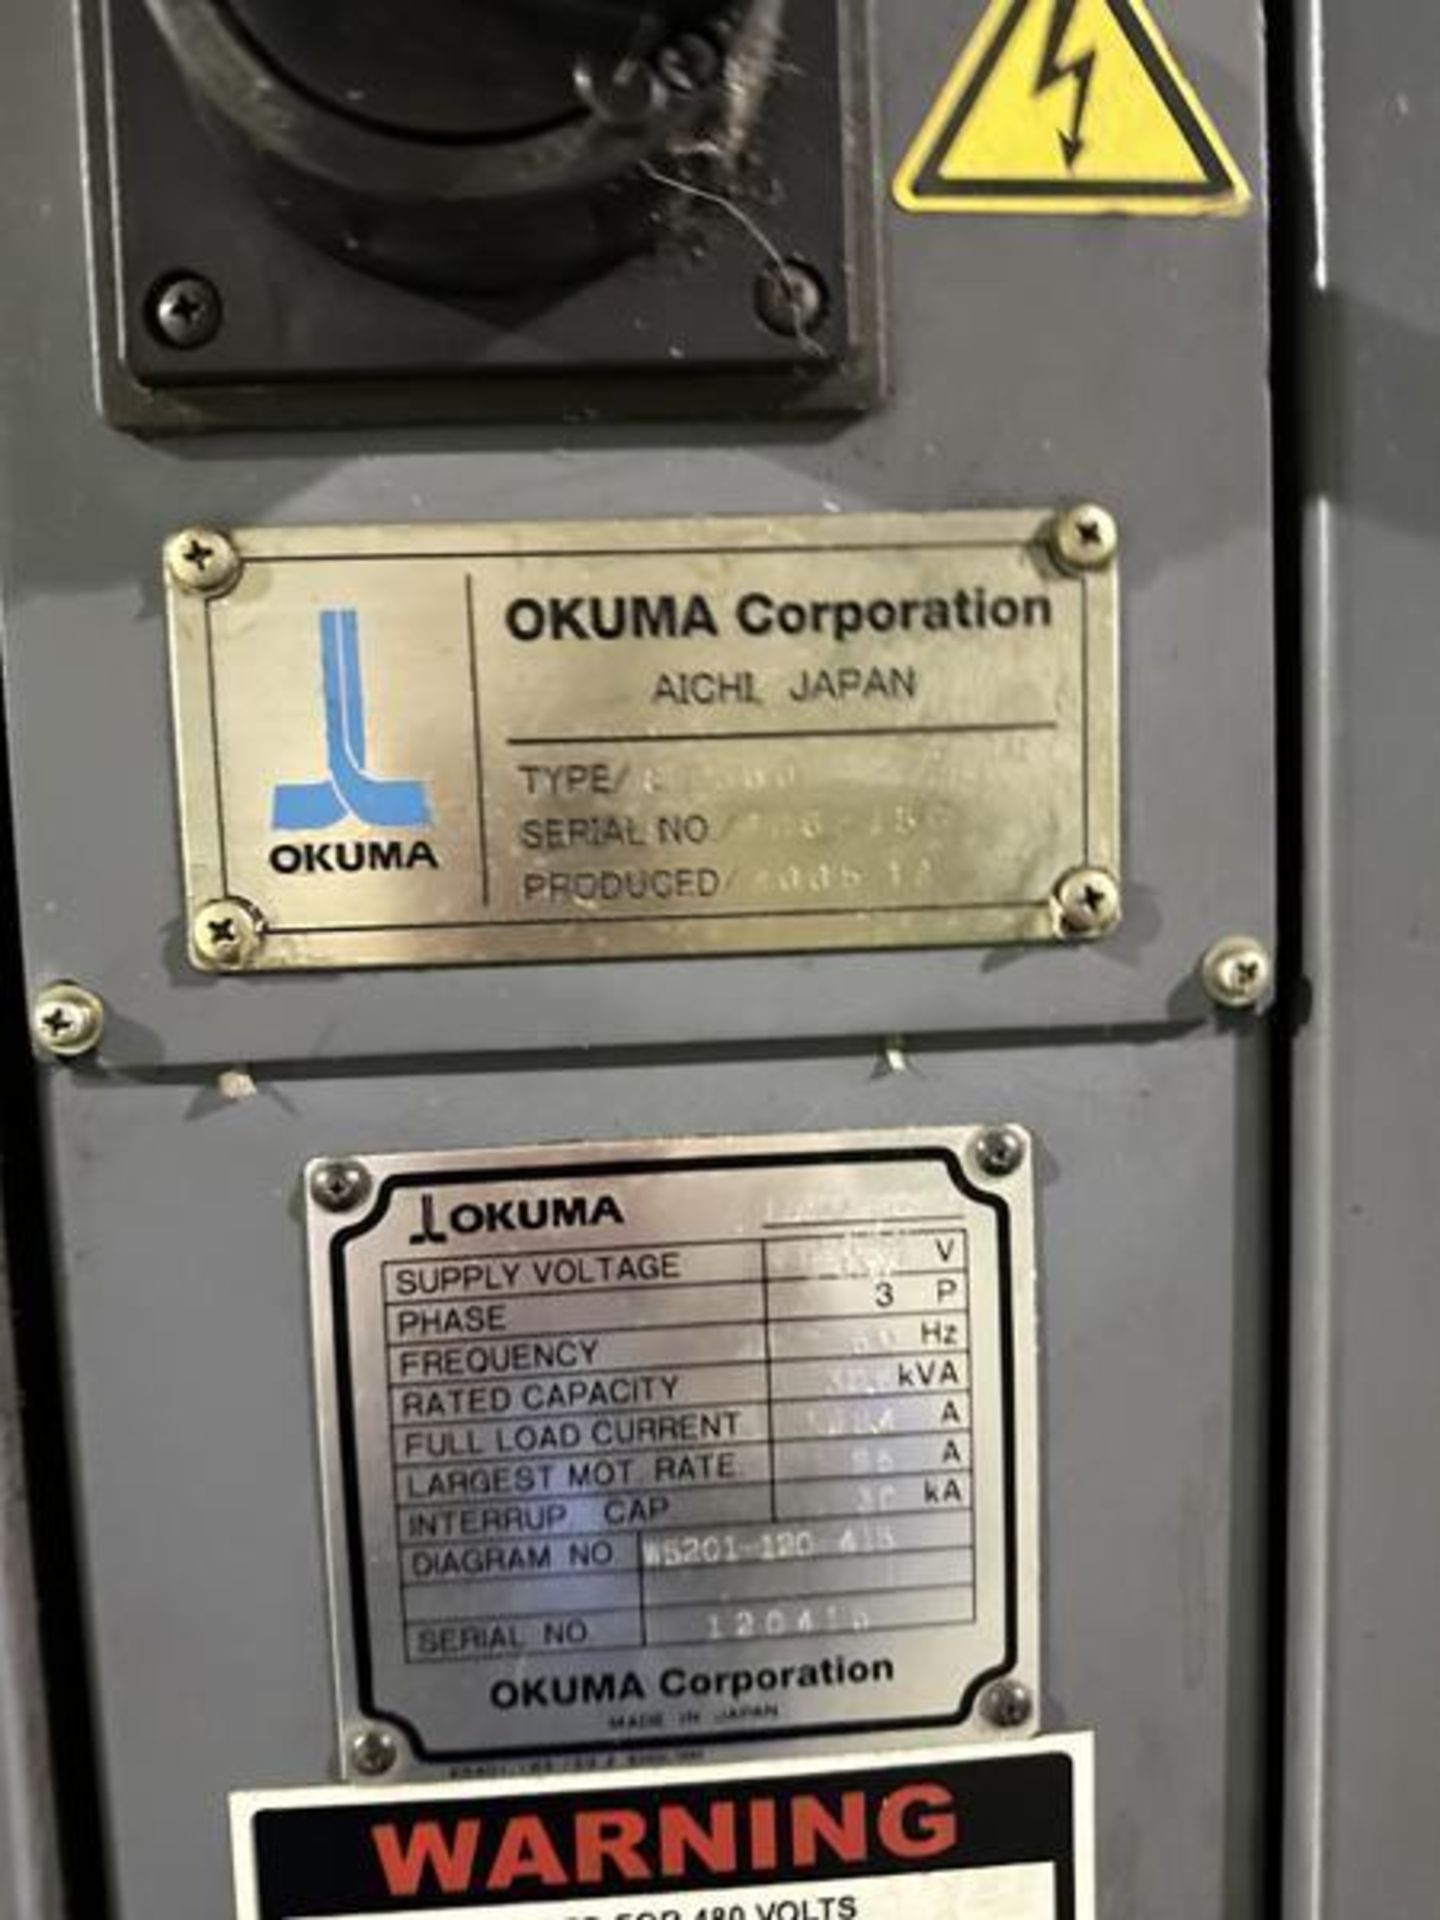 2013 Okuma Simulturn CNC Lathe, Model: LU300, S/N: 120415 with OSP-P100 HMI and Fork Clamp - Image 10 of 10